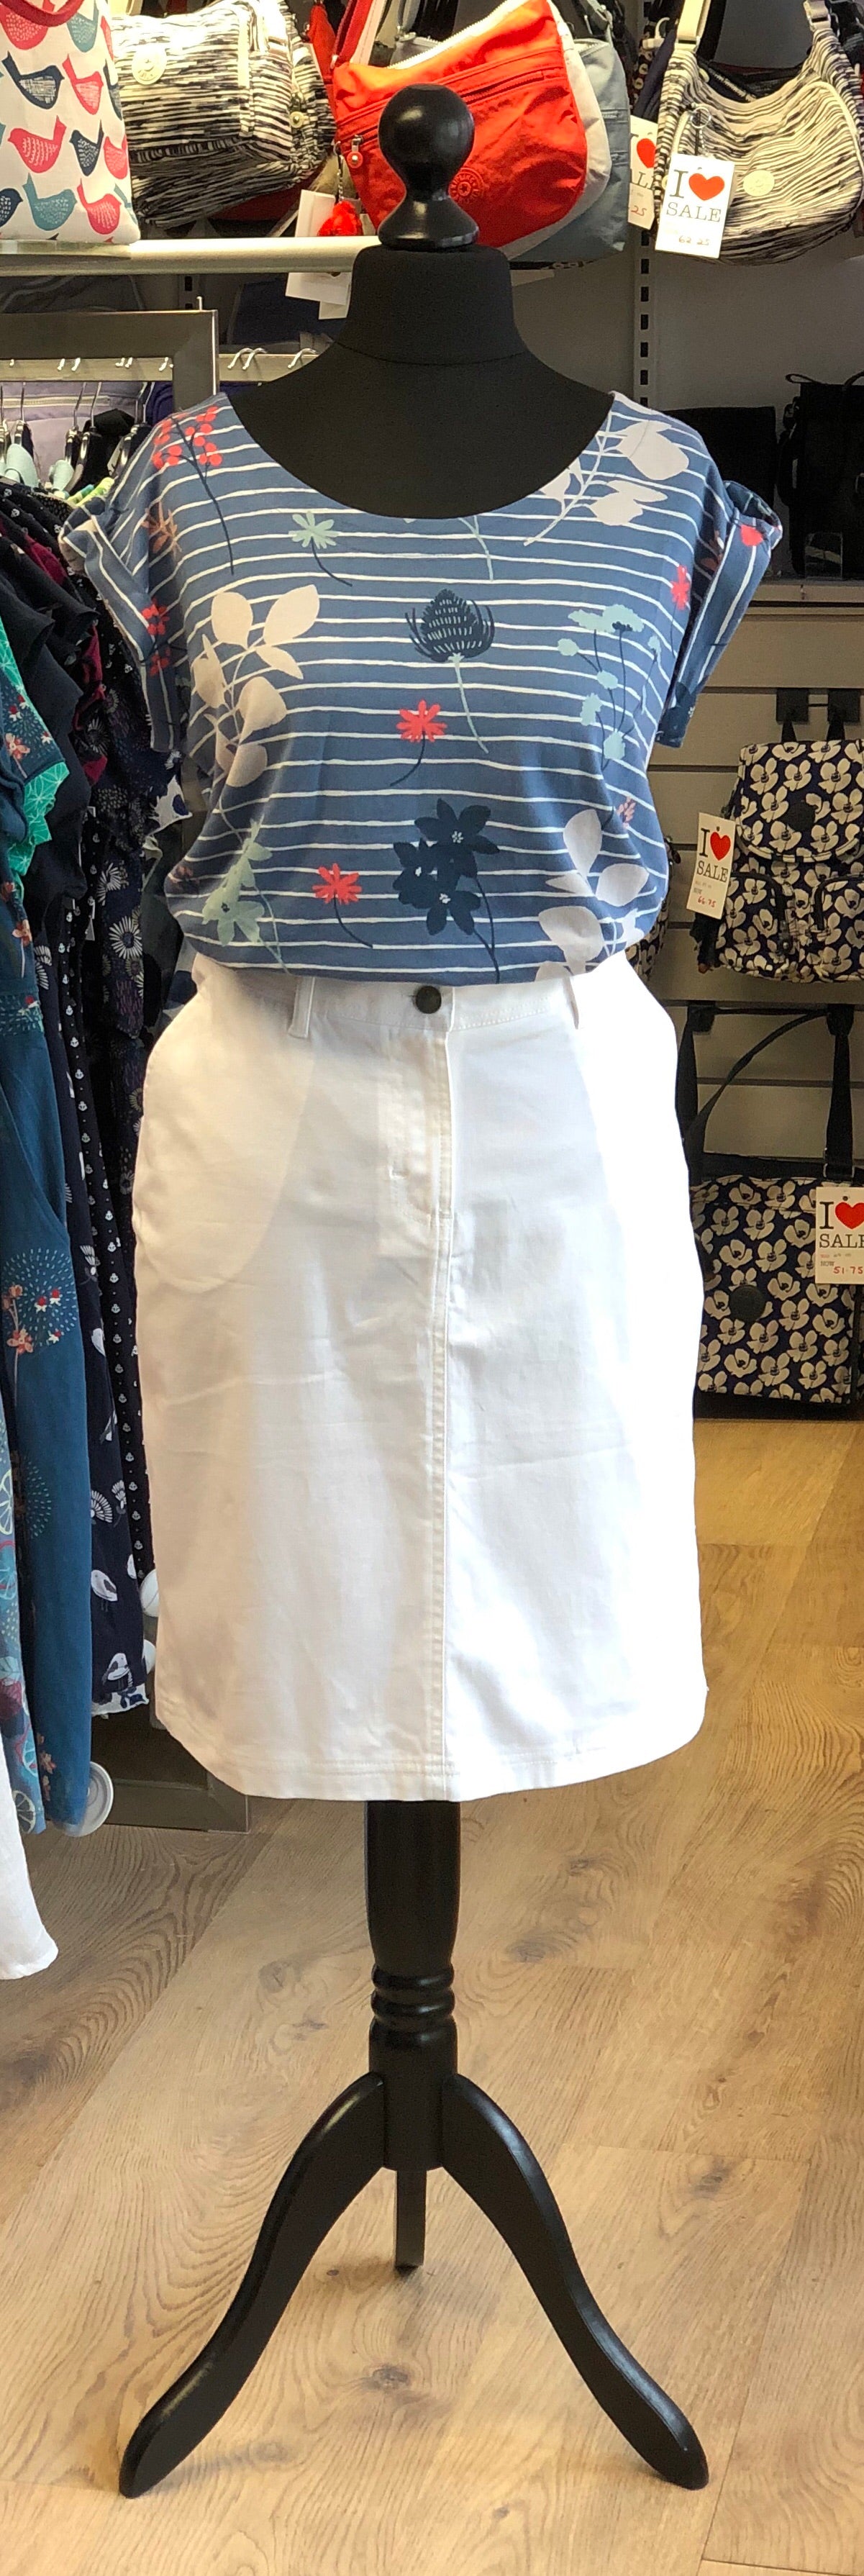 Auranne Cotton Skirt (Last chance to buy)